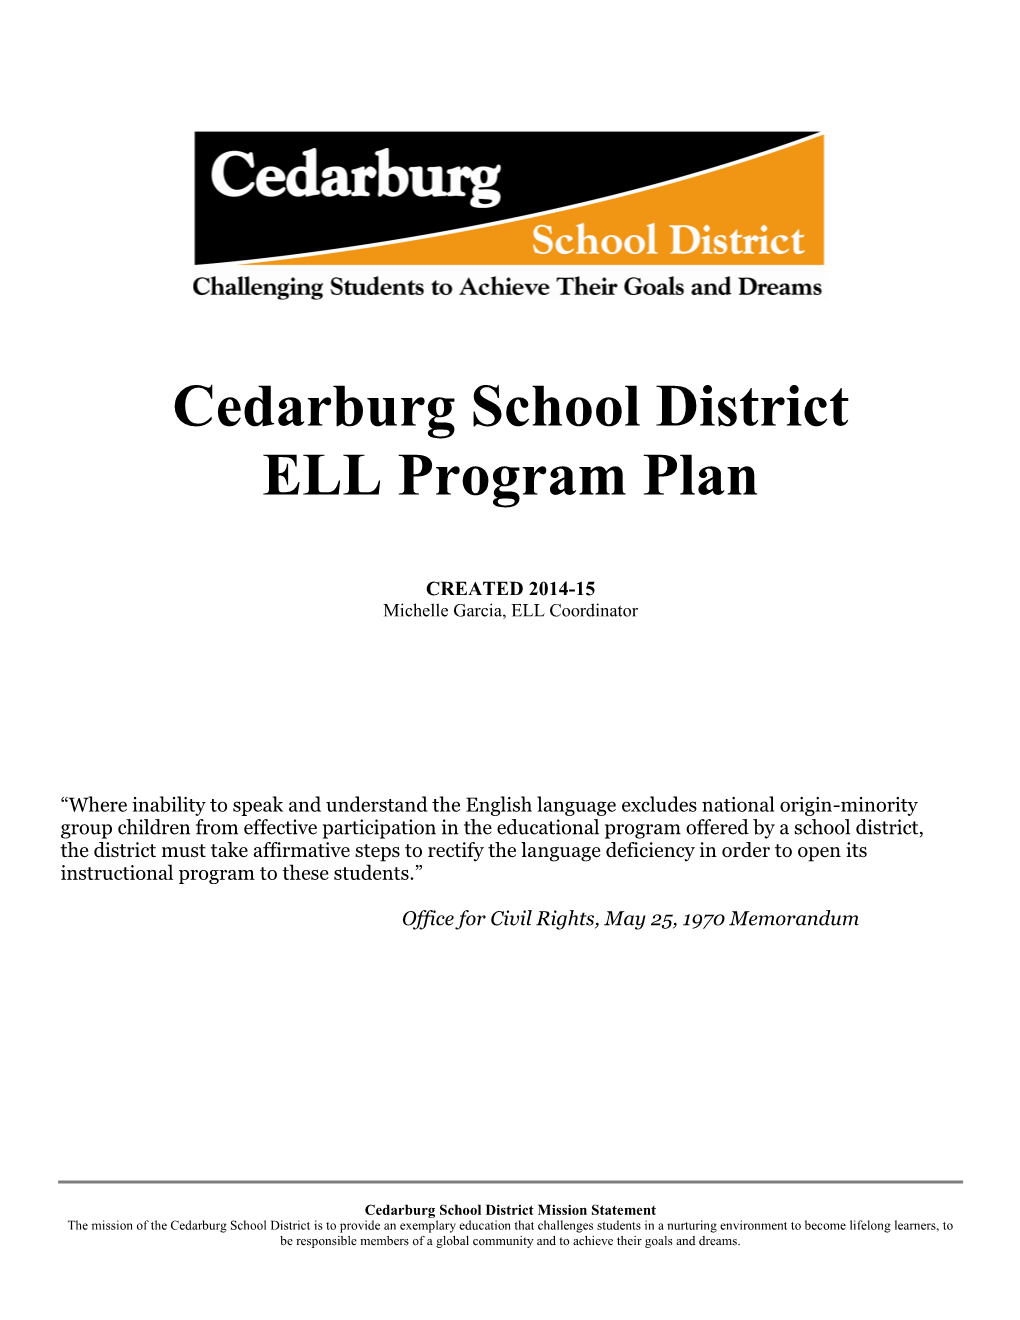 Cedarburg School District ELL Program Plan